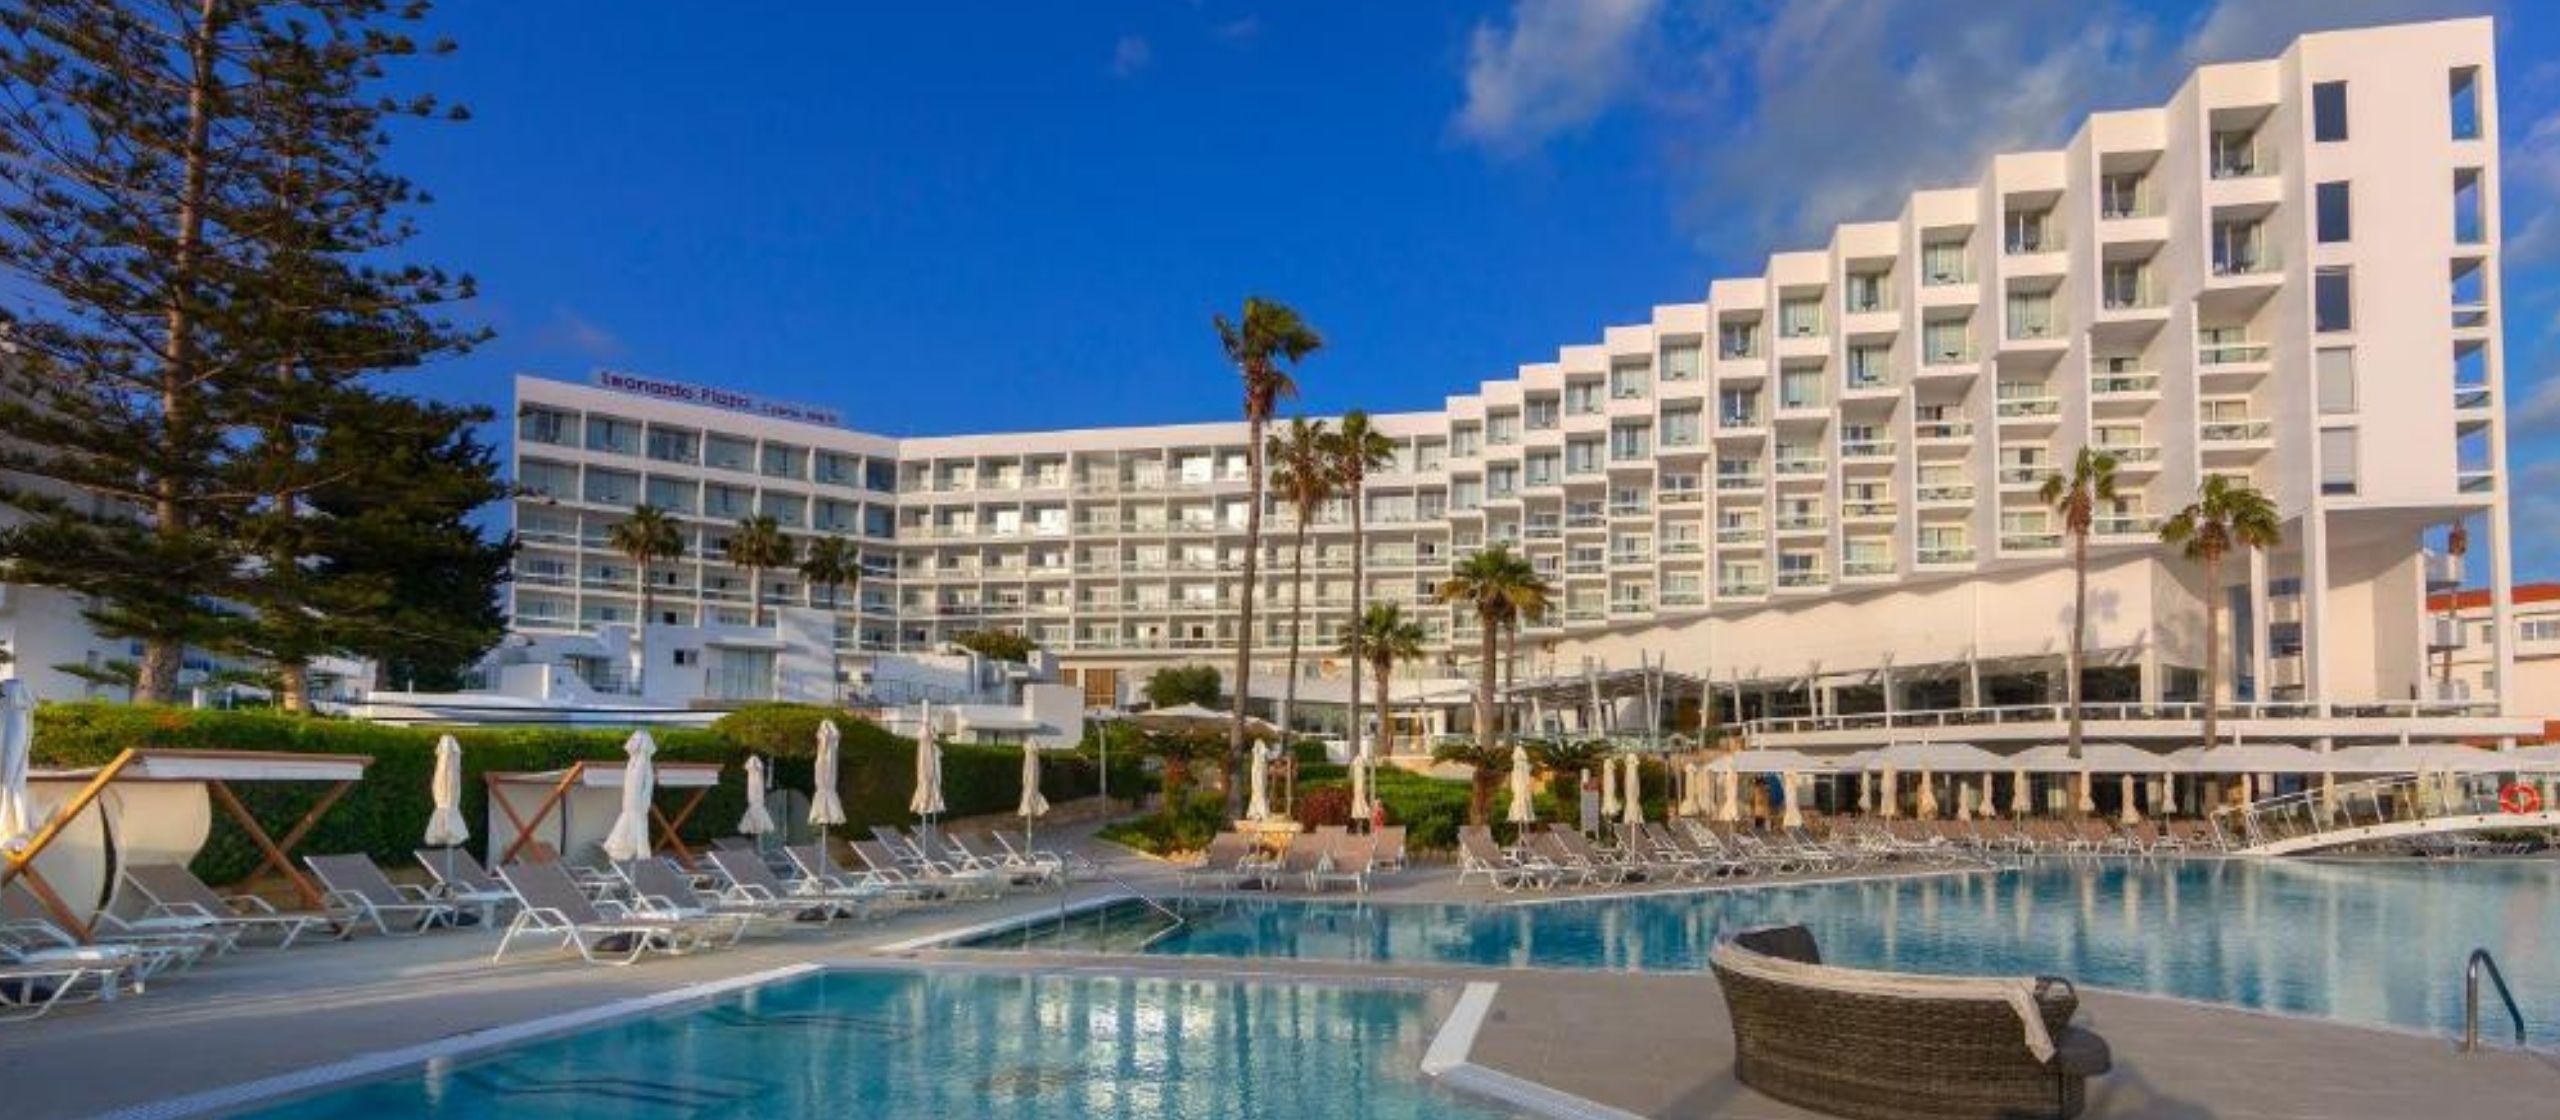 Leonardo Plaza Cypria Maris <br />Beach Hotel & Spa in Cyprus”></p>
<h2> Leonardo Plaza Cypria <br /> Maris Beach Hotel & Spa </h2>
<p><span uk-icon=